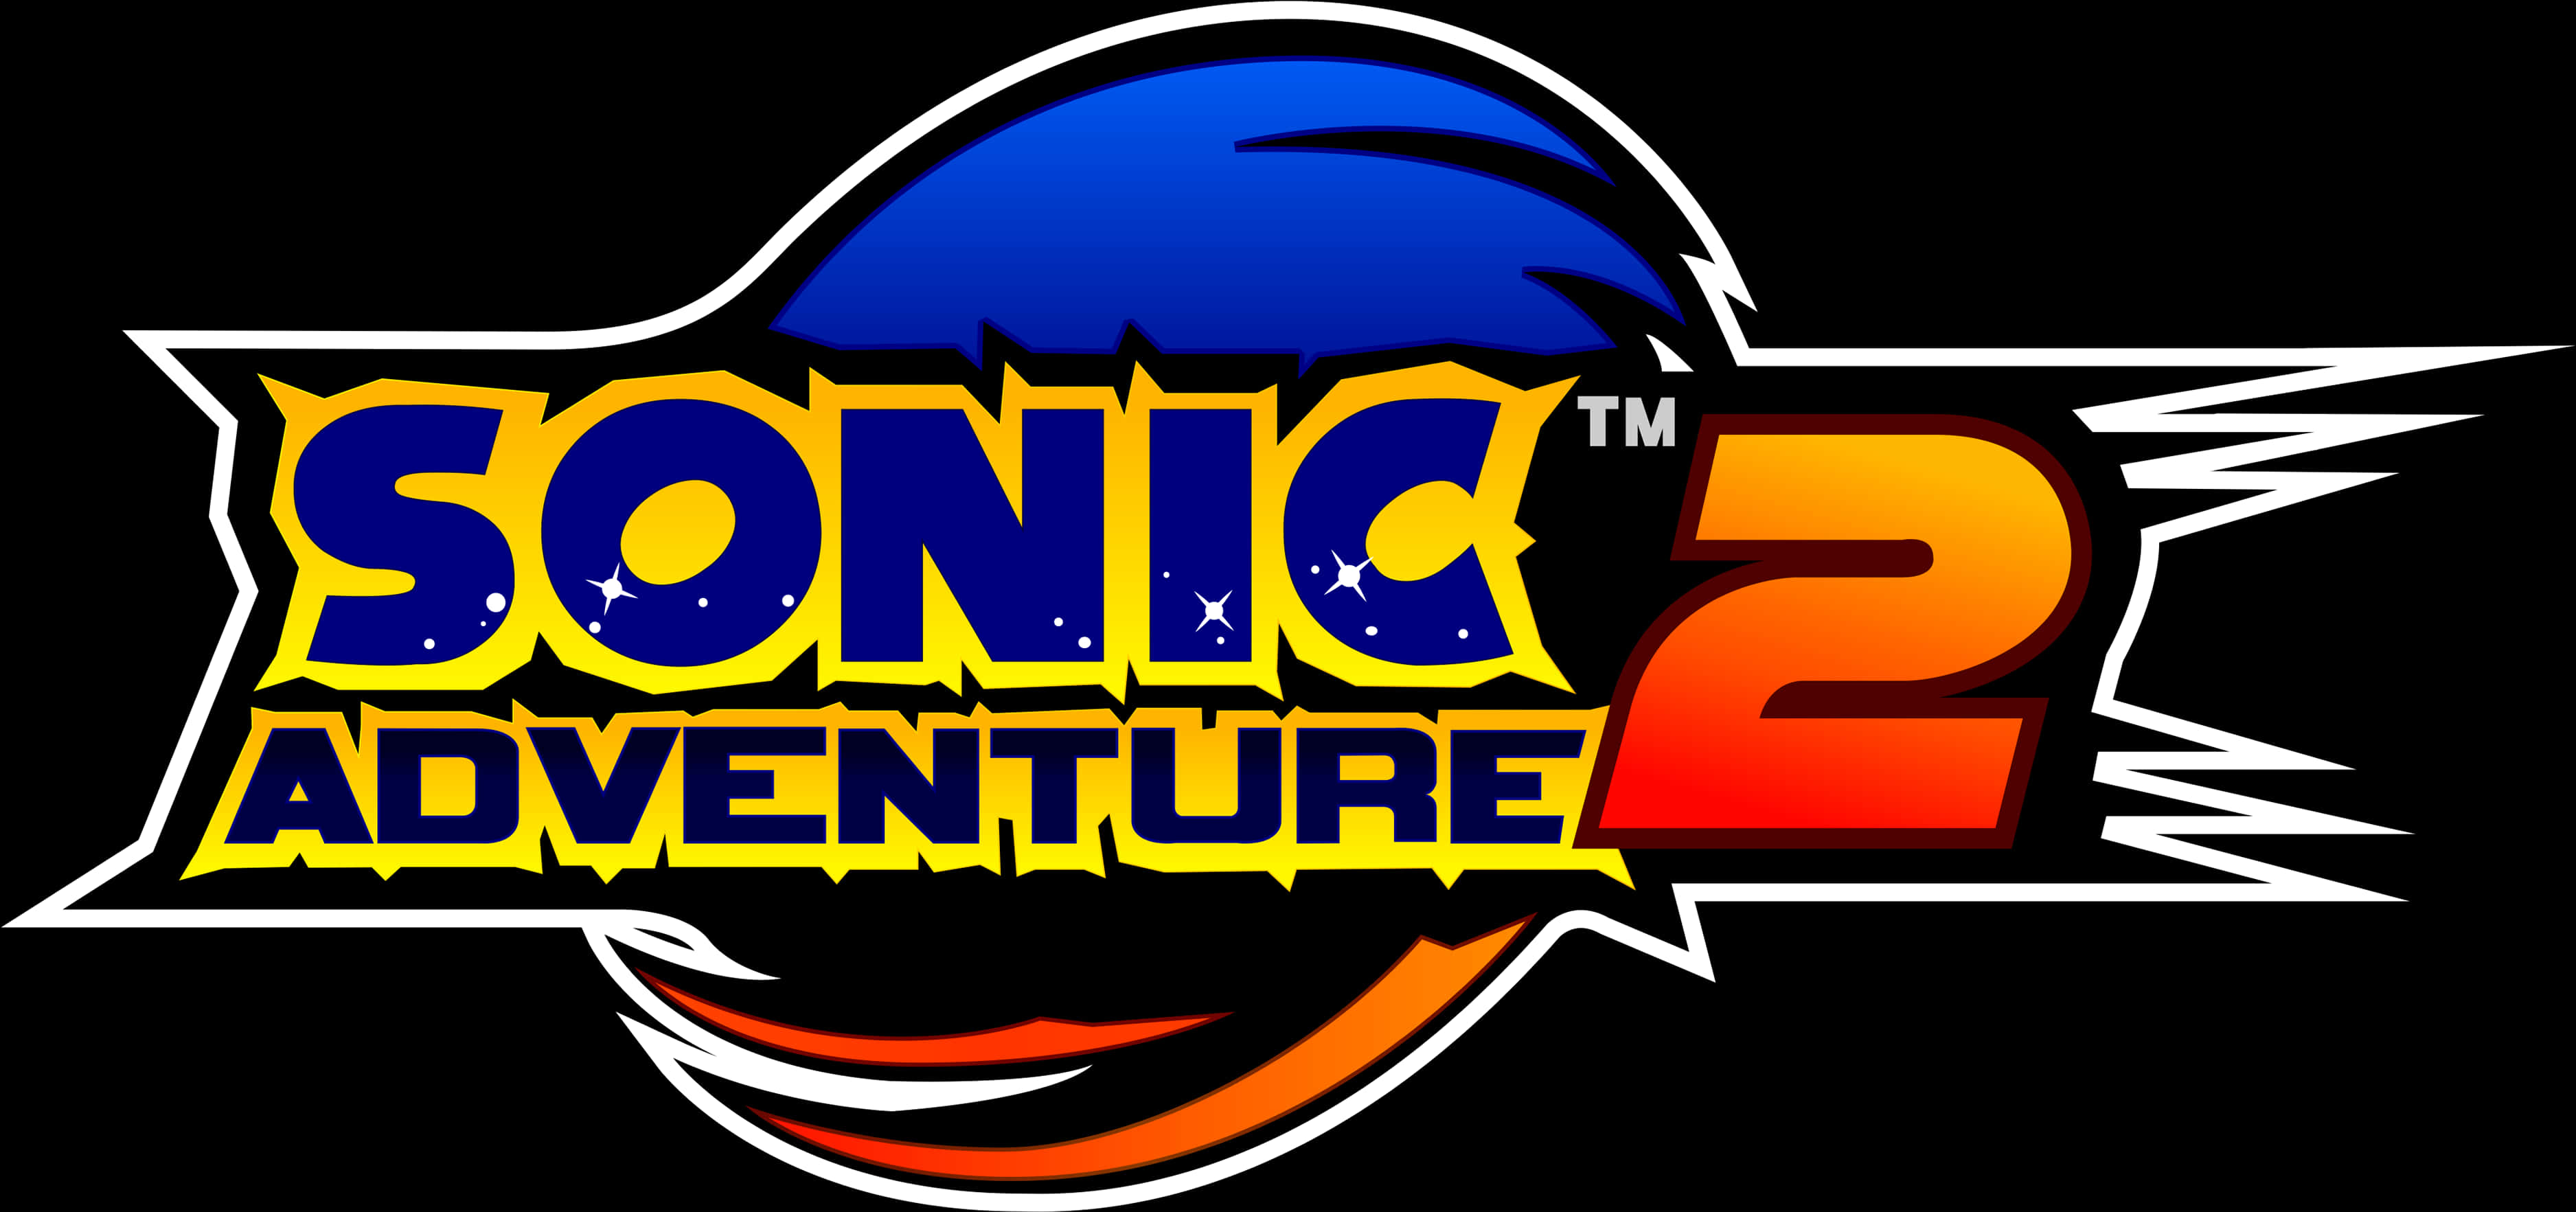 Sonic Adventure2 Logo PNG image